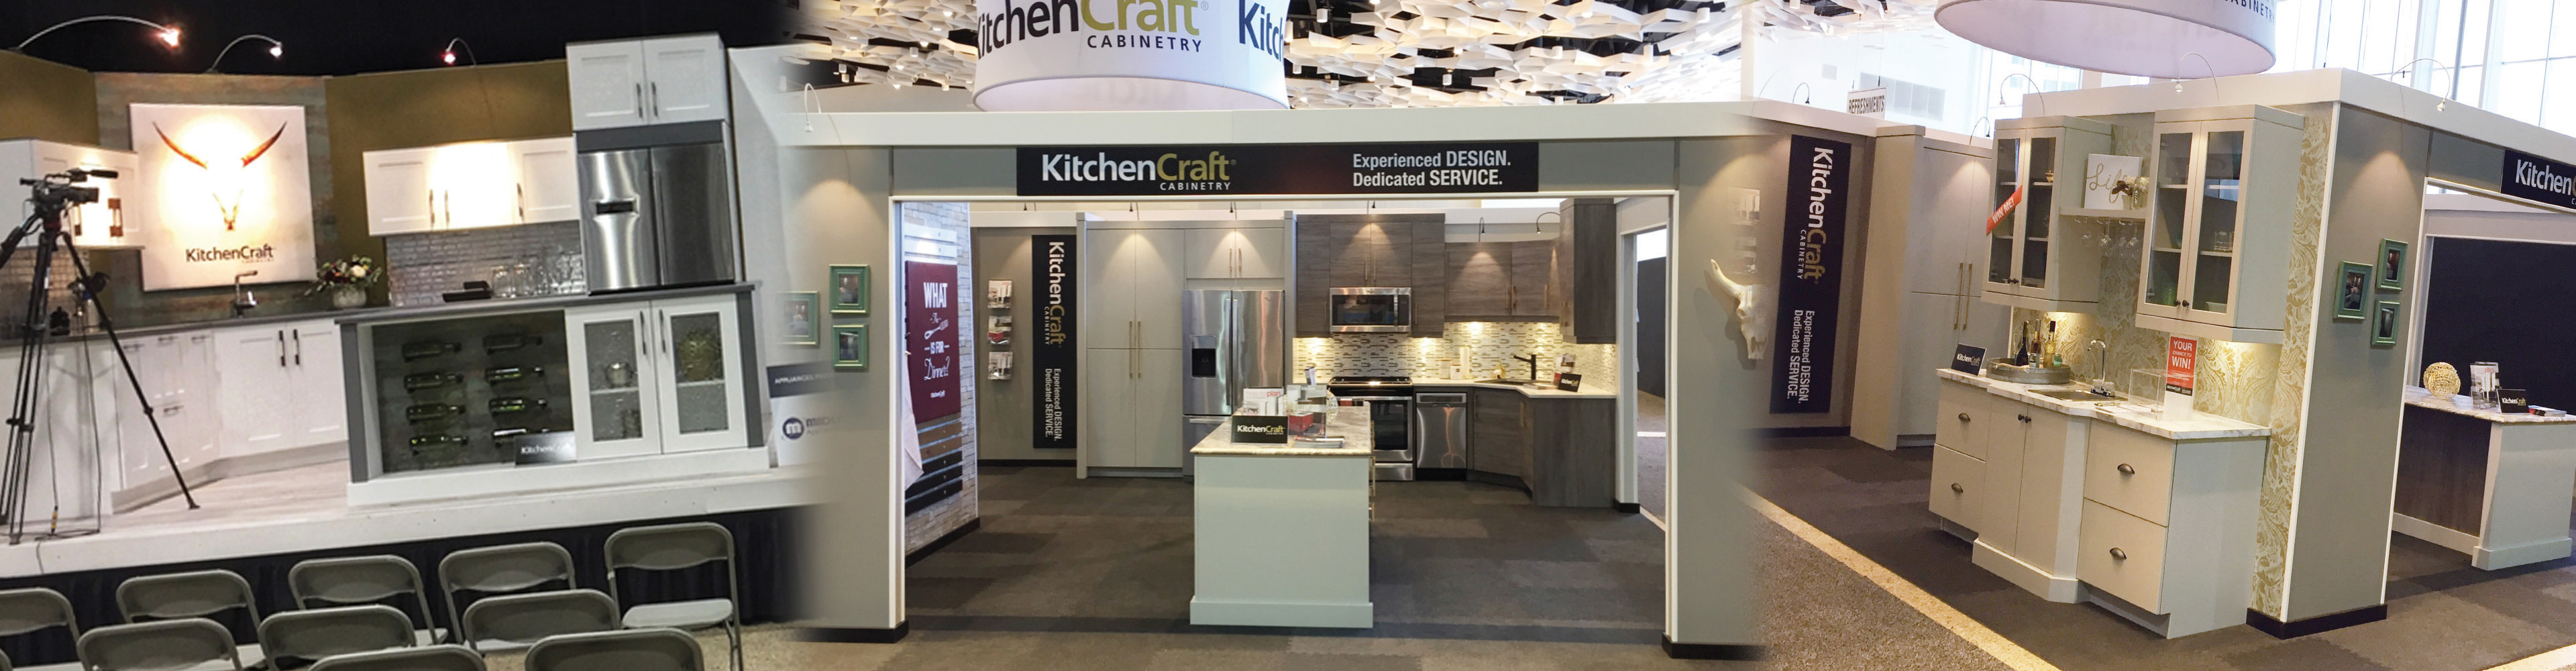 Edmonton Home And Garden Show Kitchencraft Retail Stores